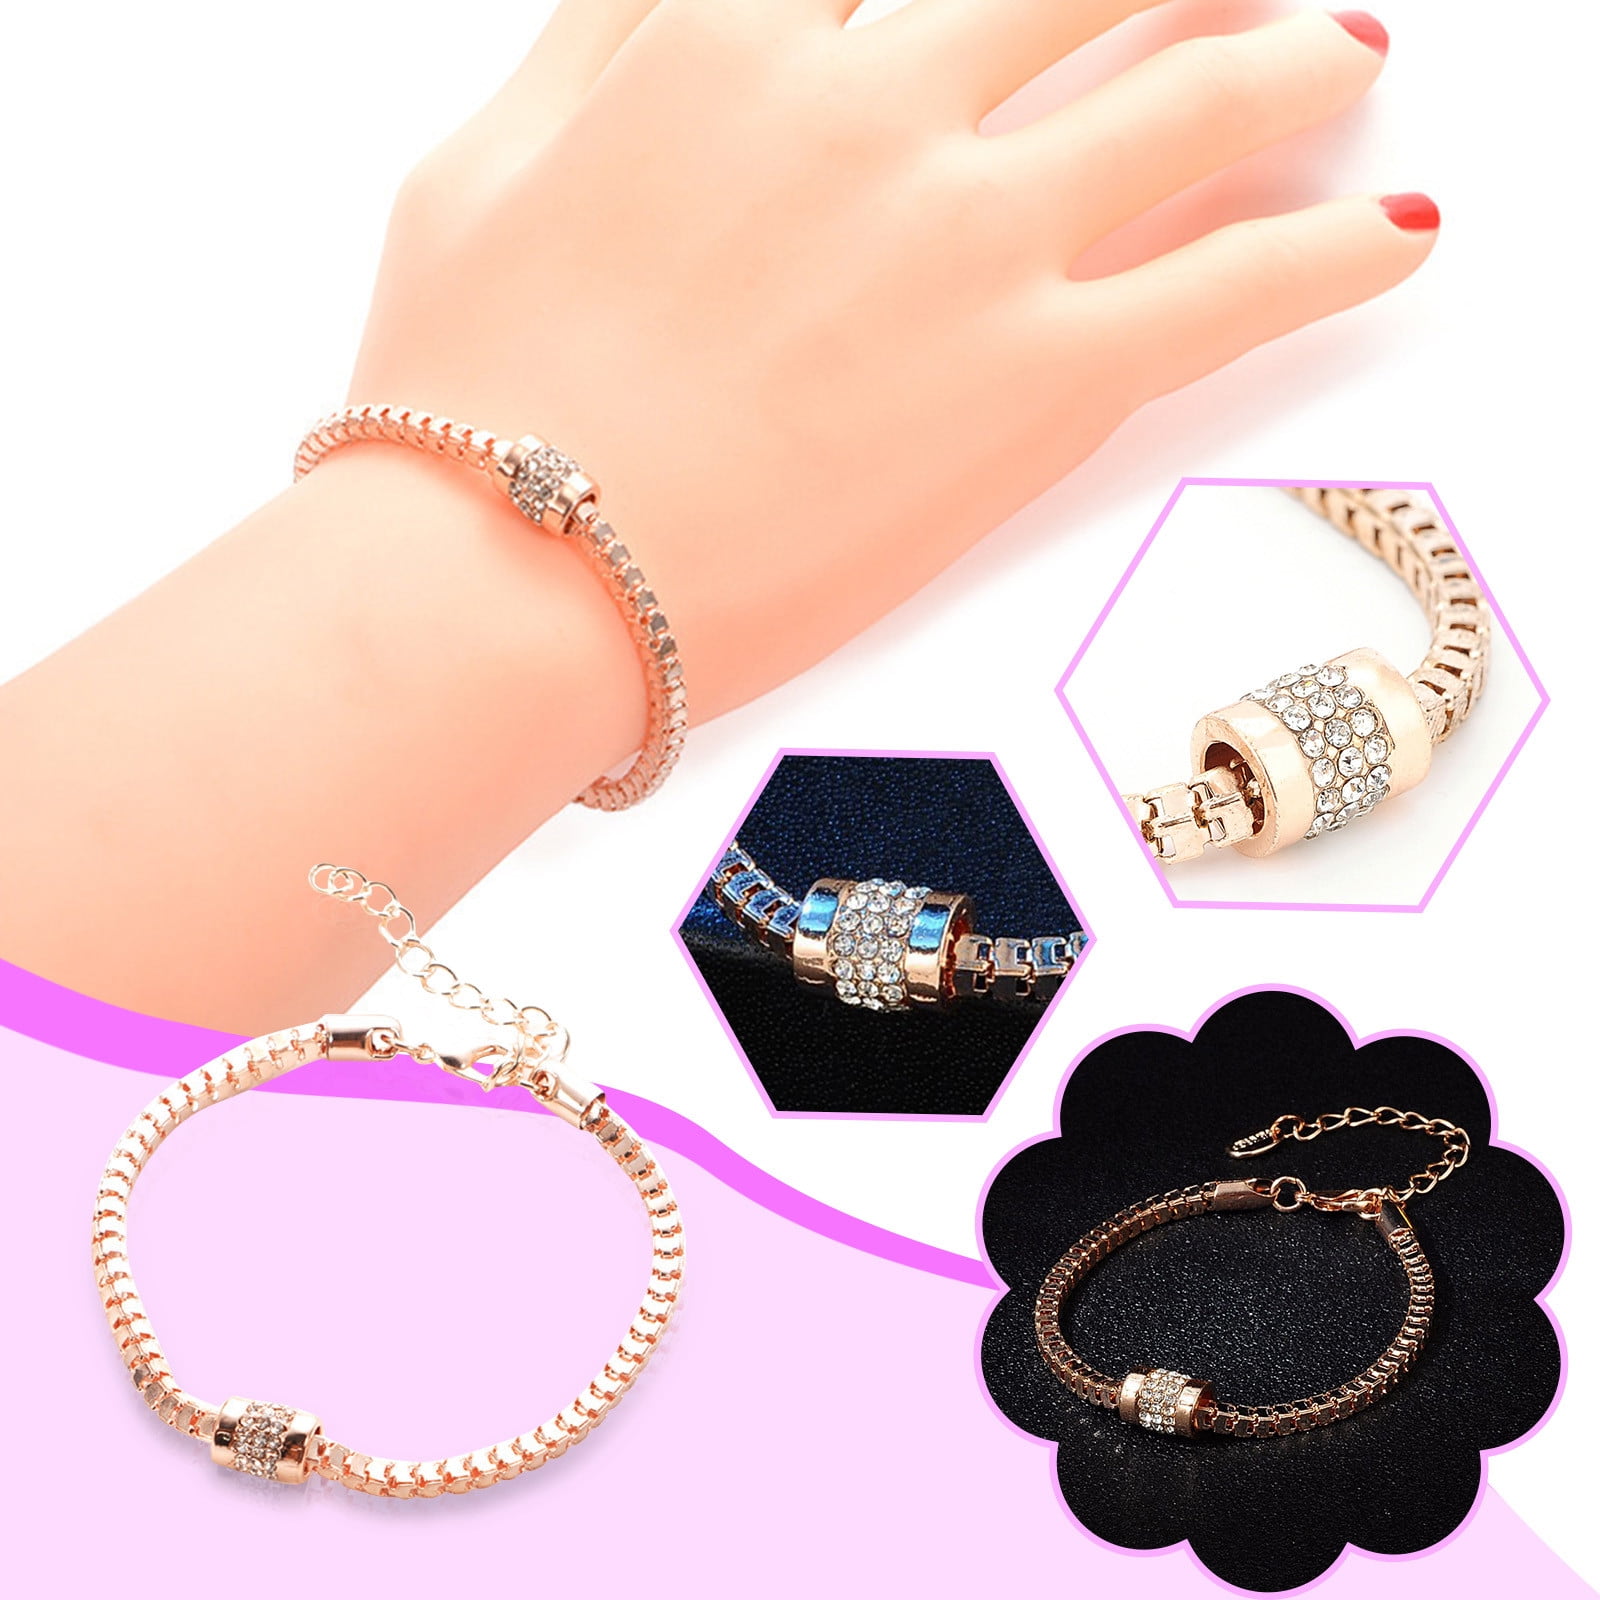 Fashion Luxury Women Zircon CZ Crystal Cuff Bangle Chain Bracelet Jewelry Gift